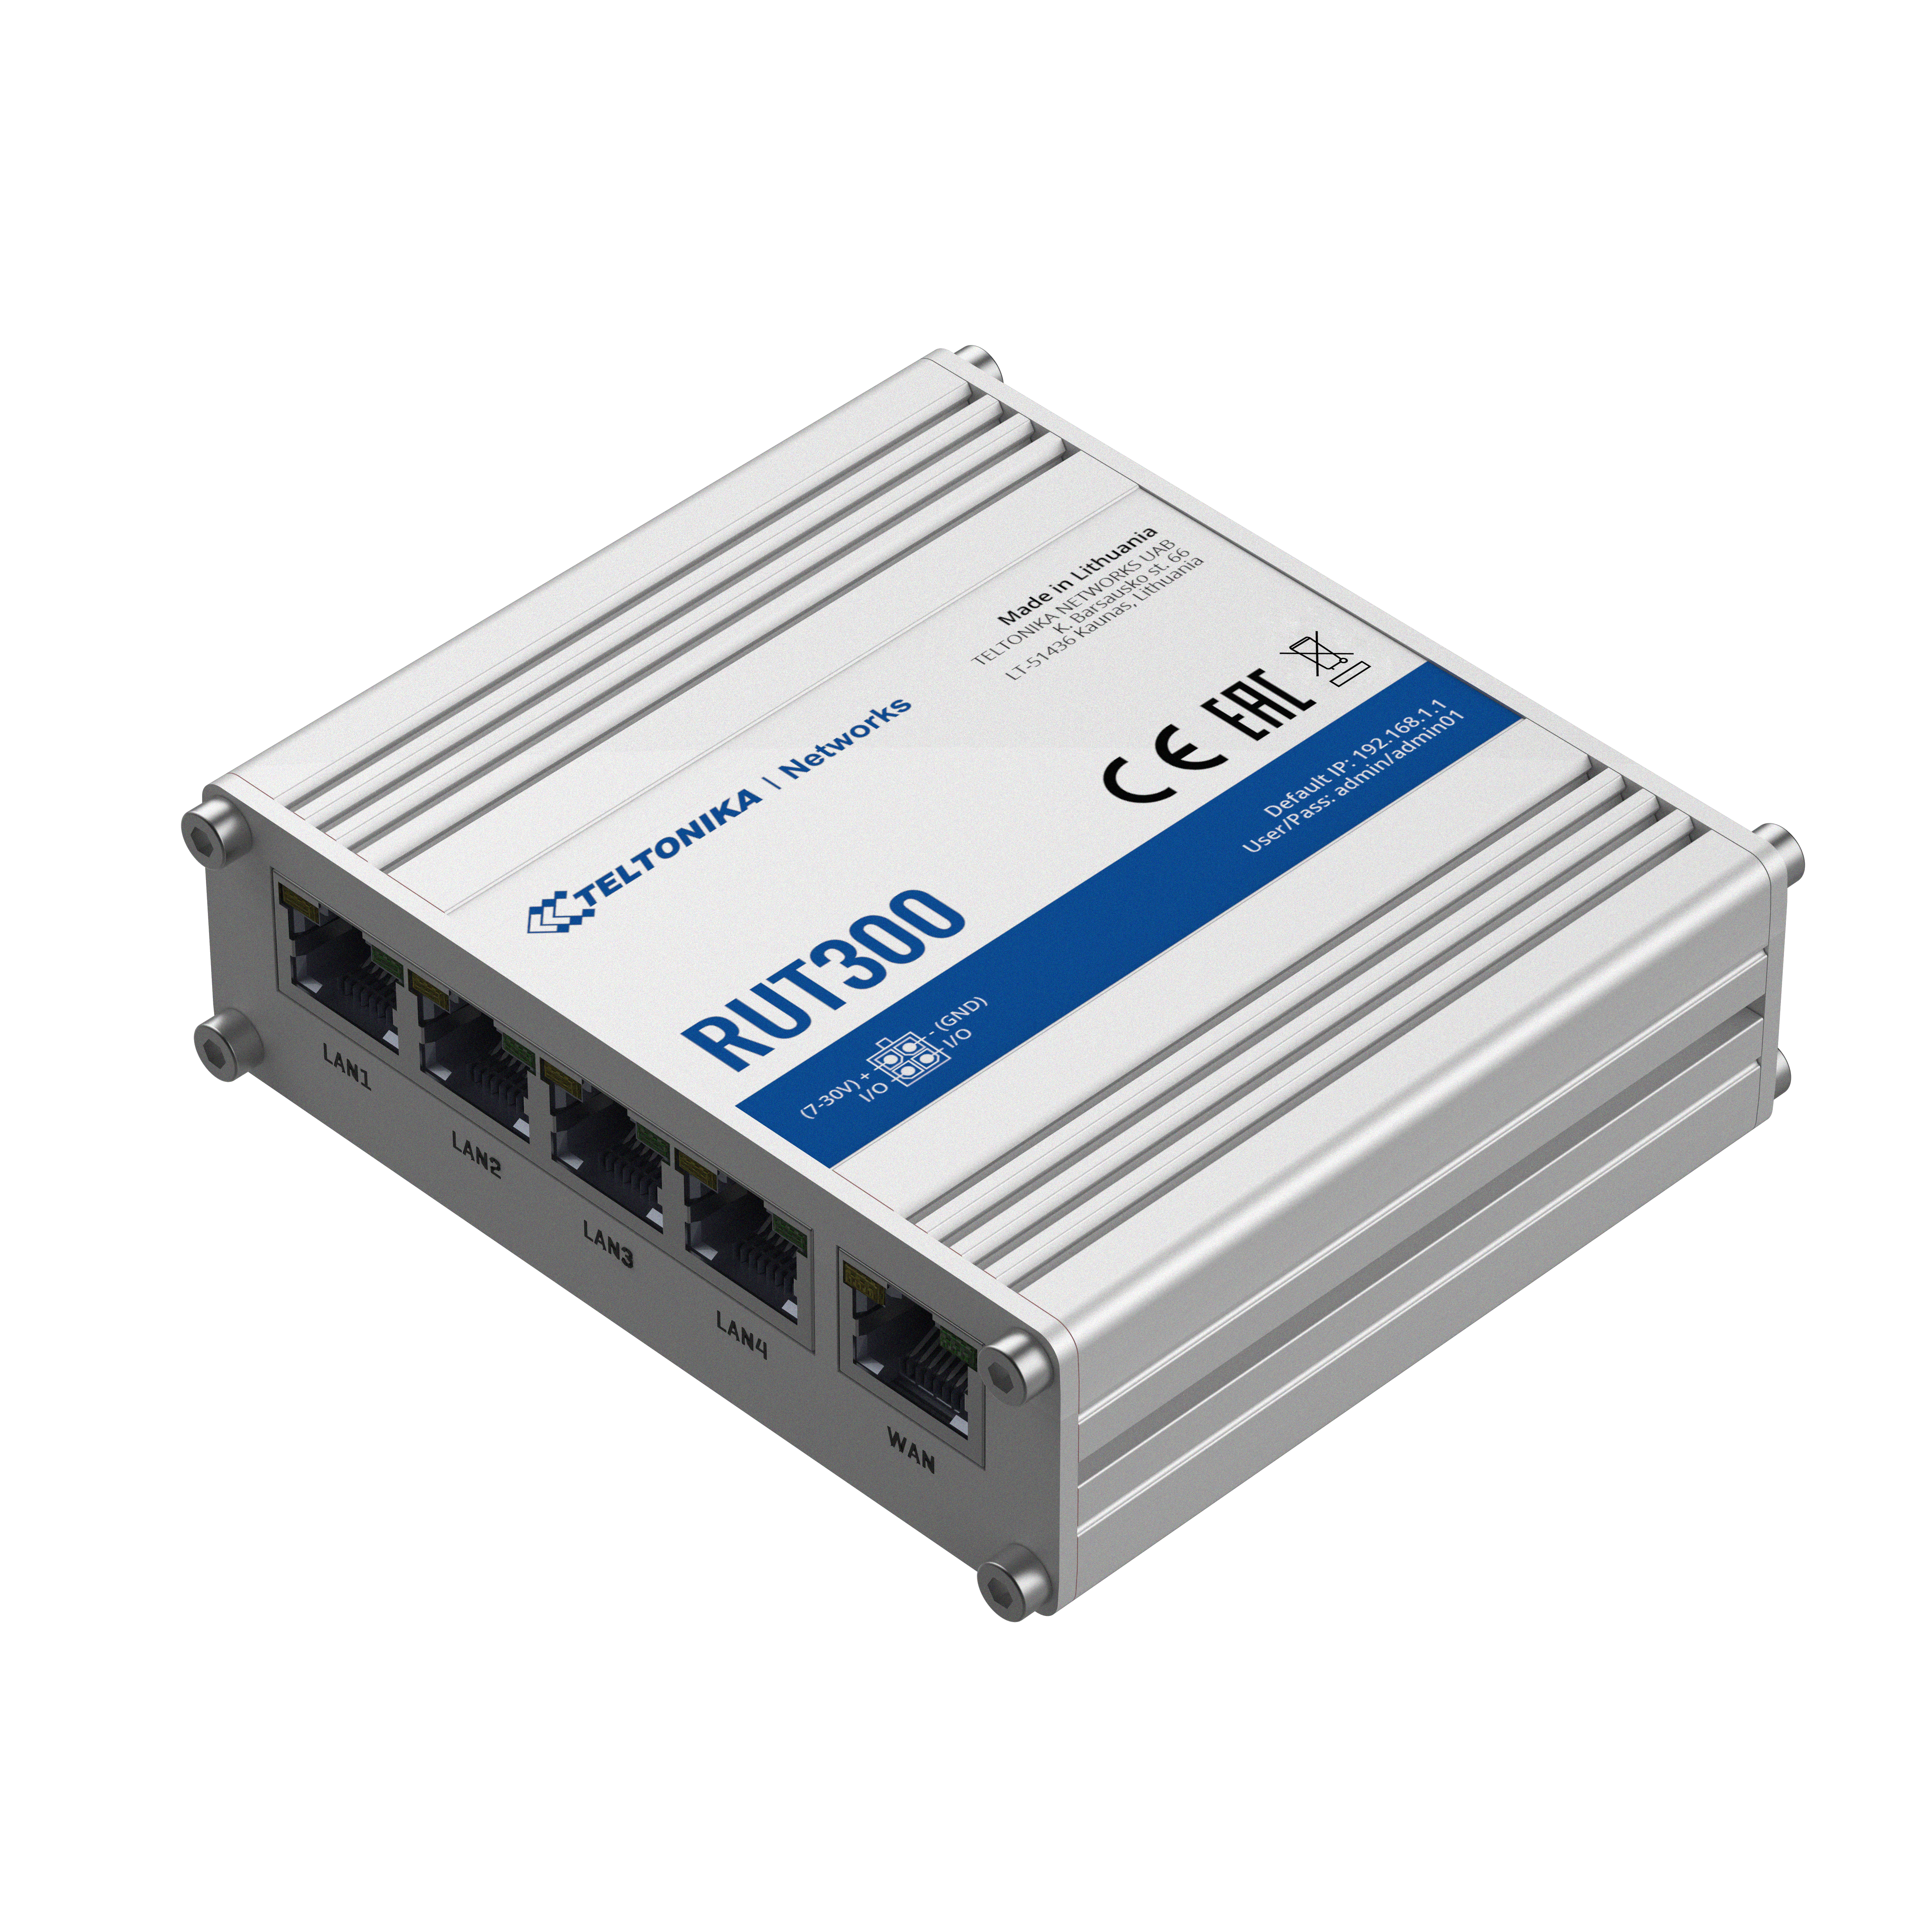 RUT300 - Industrial Cellular Router. 5 Ethernet ports